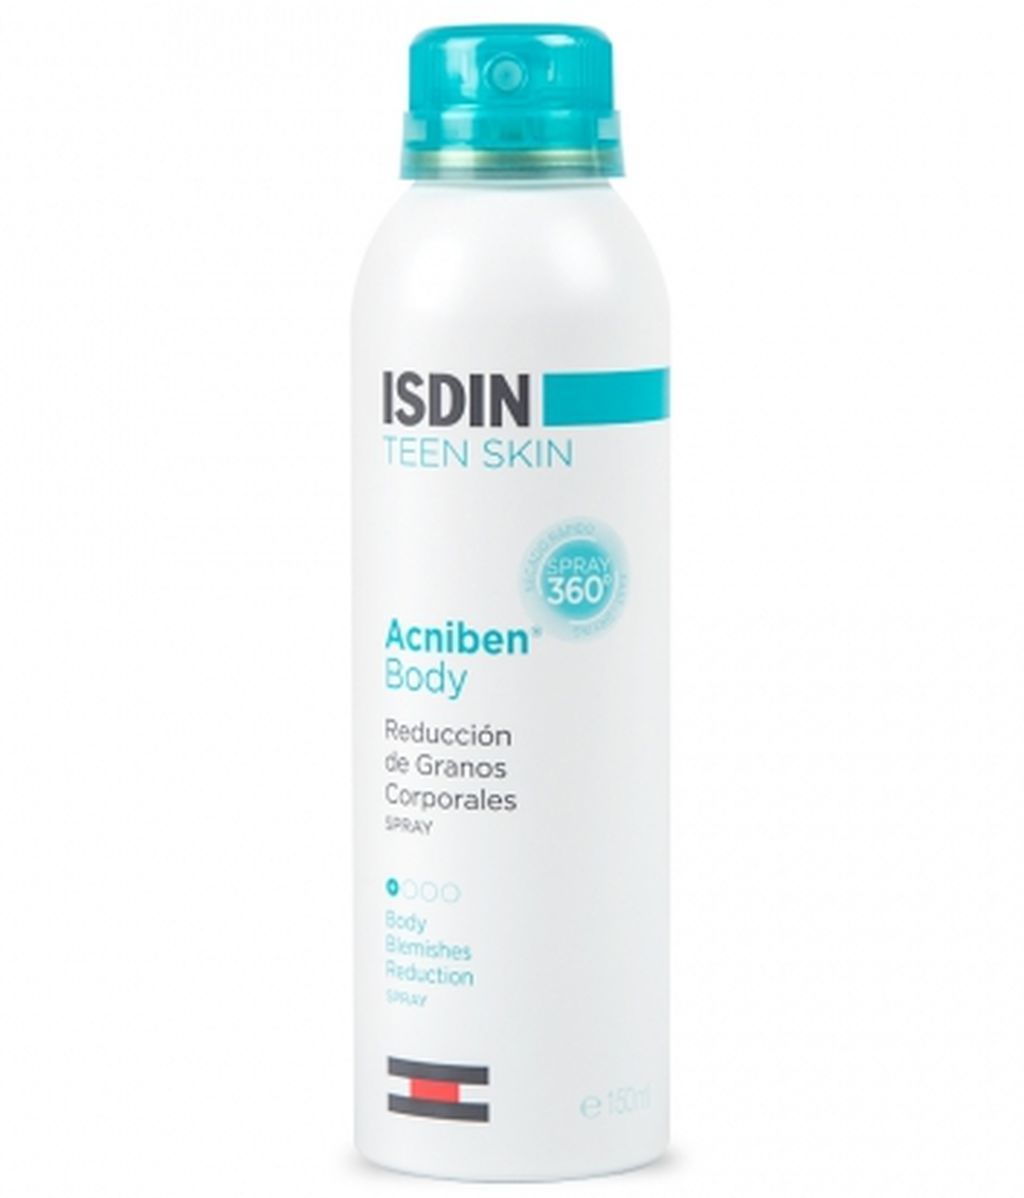 acniben-body-1000x1000-ISDIN